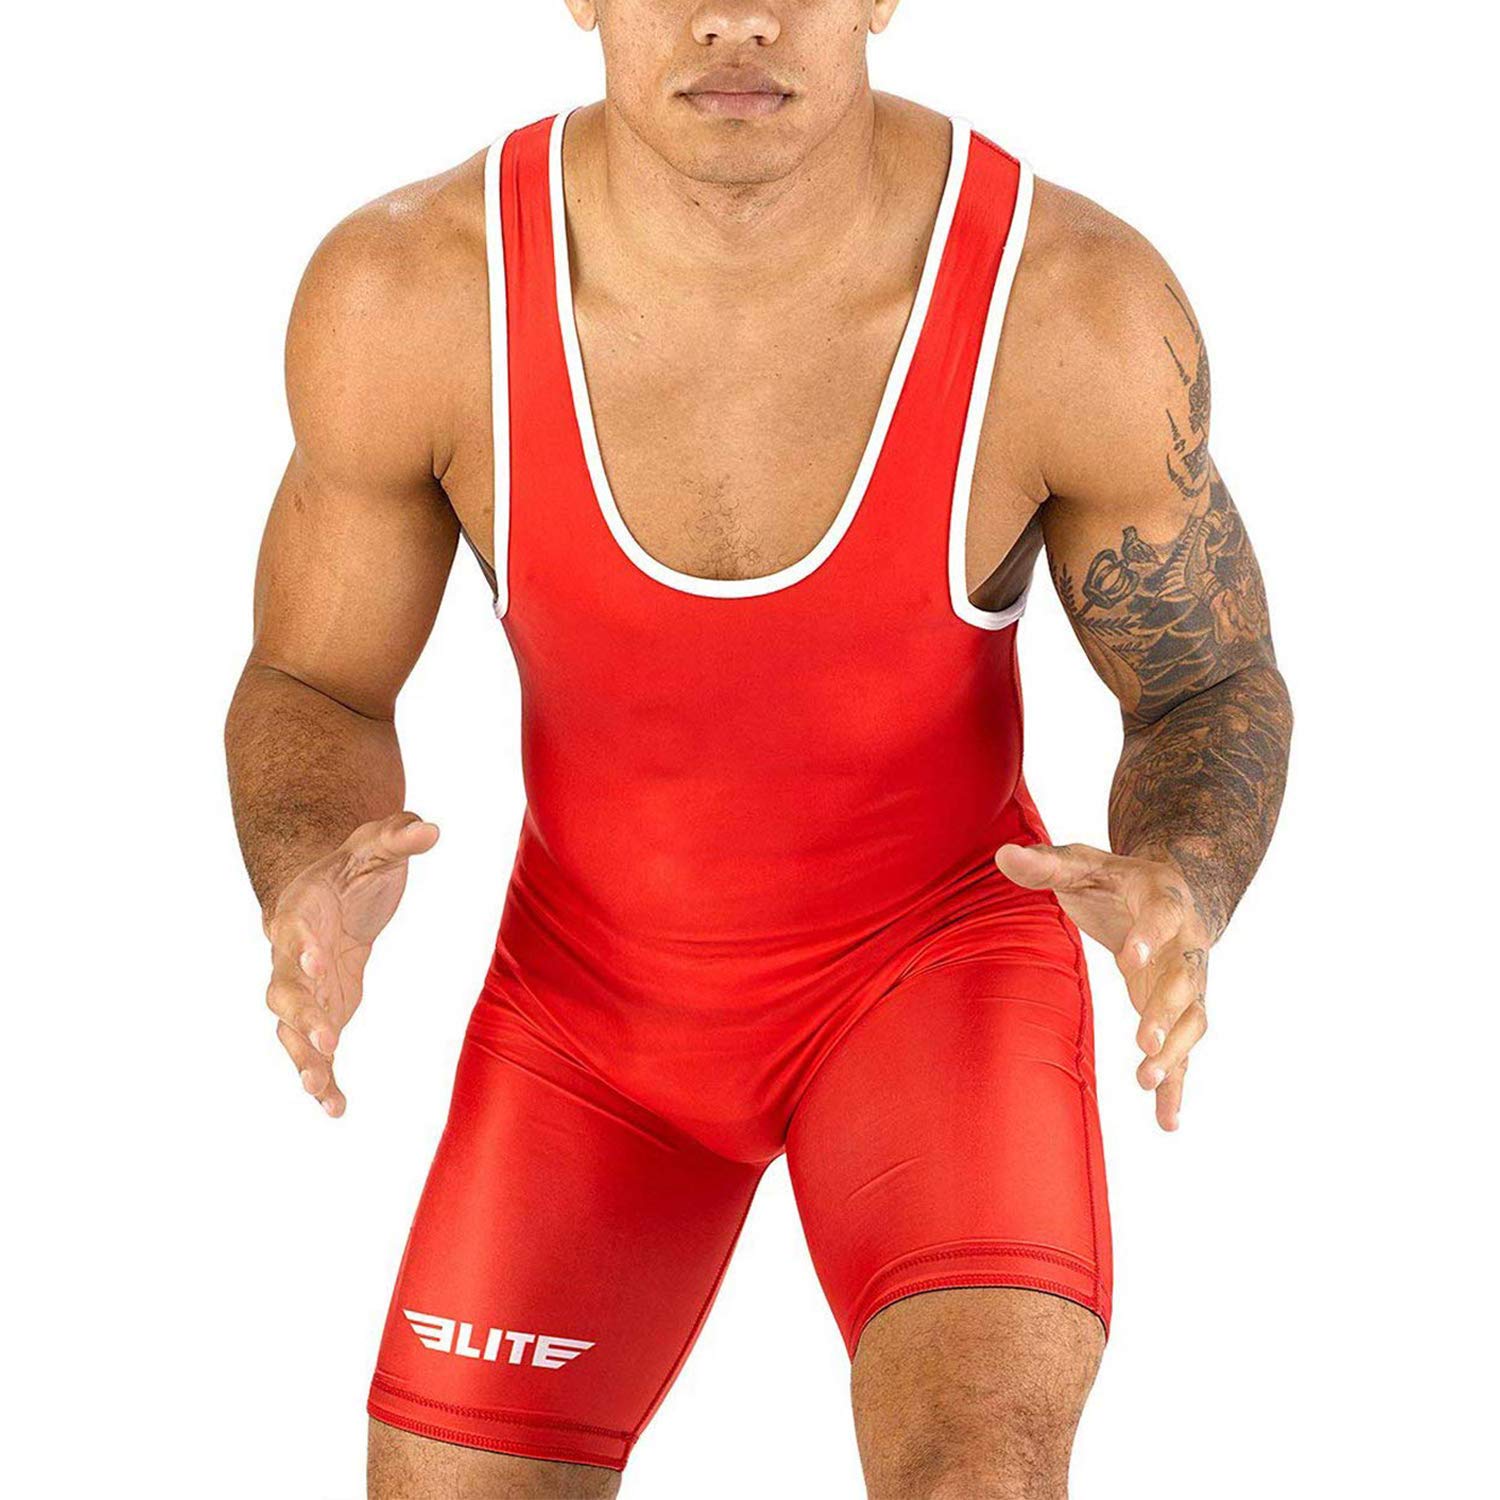 Elite Sports Menas Wrestling Singlets, Standard Singlet For Men Wrestling Uniform (Red, Small)